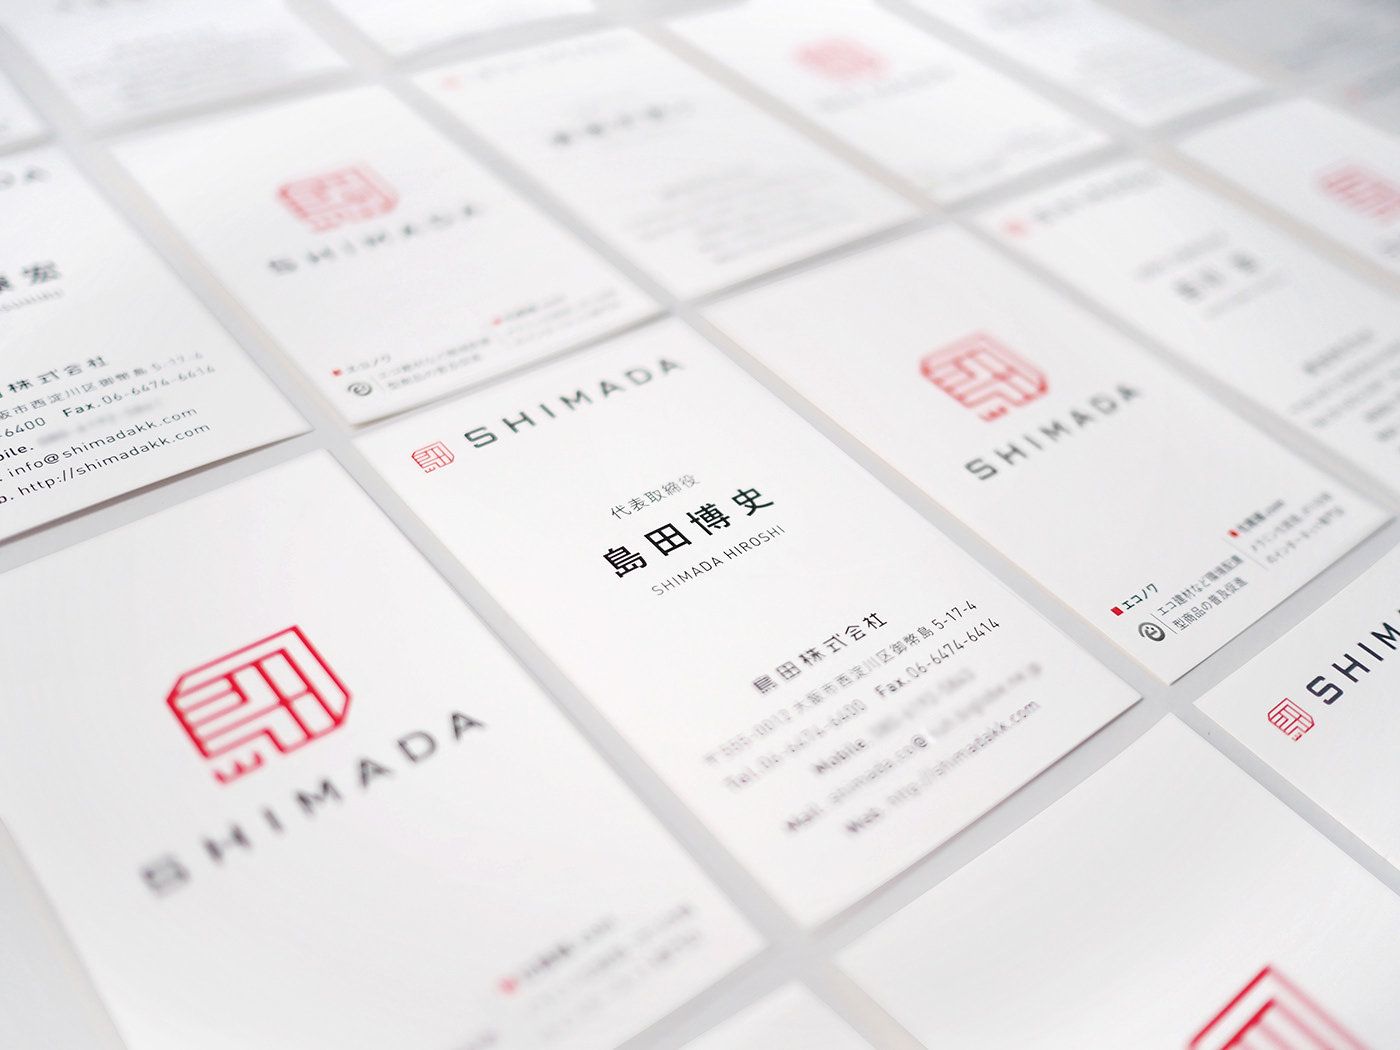 Shimada Co. Ltd Brand Identity Spotlight